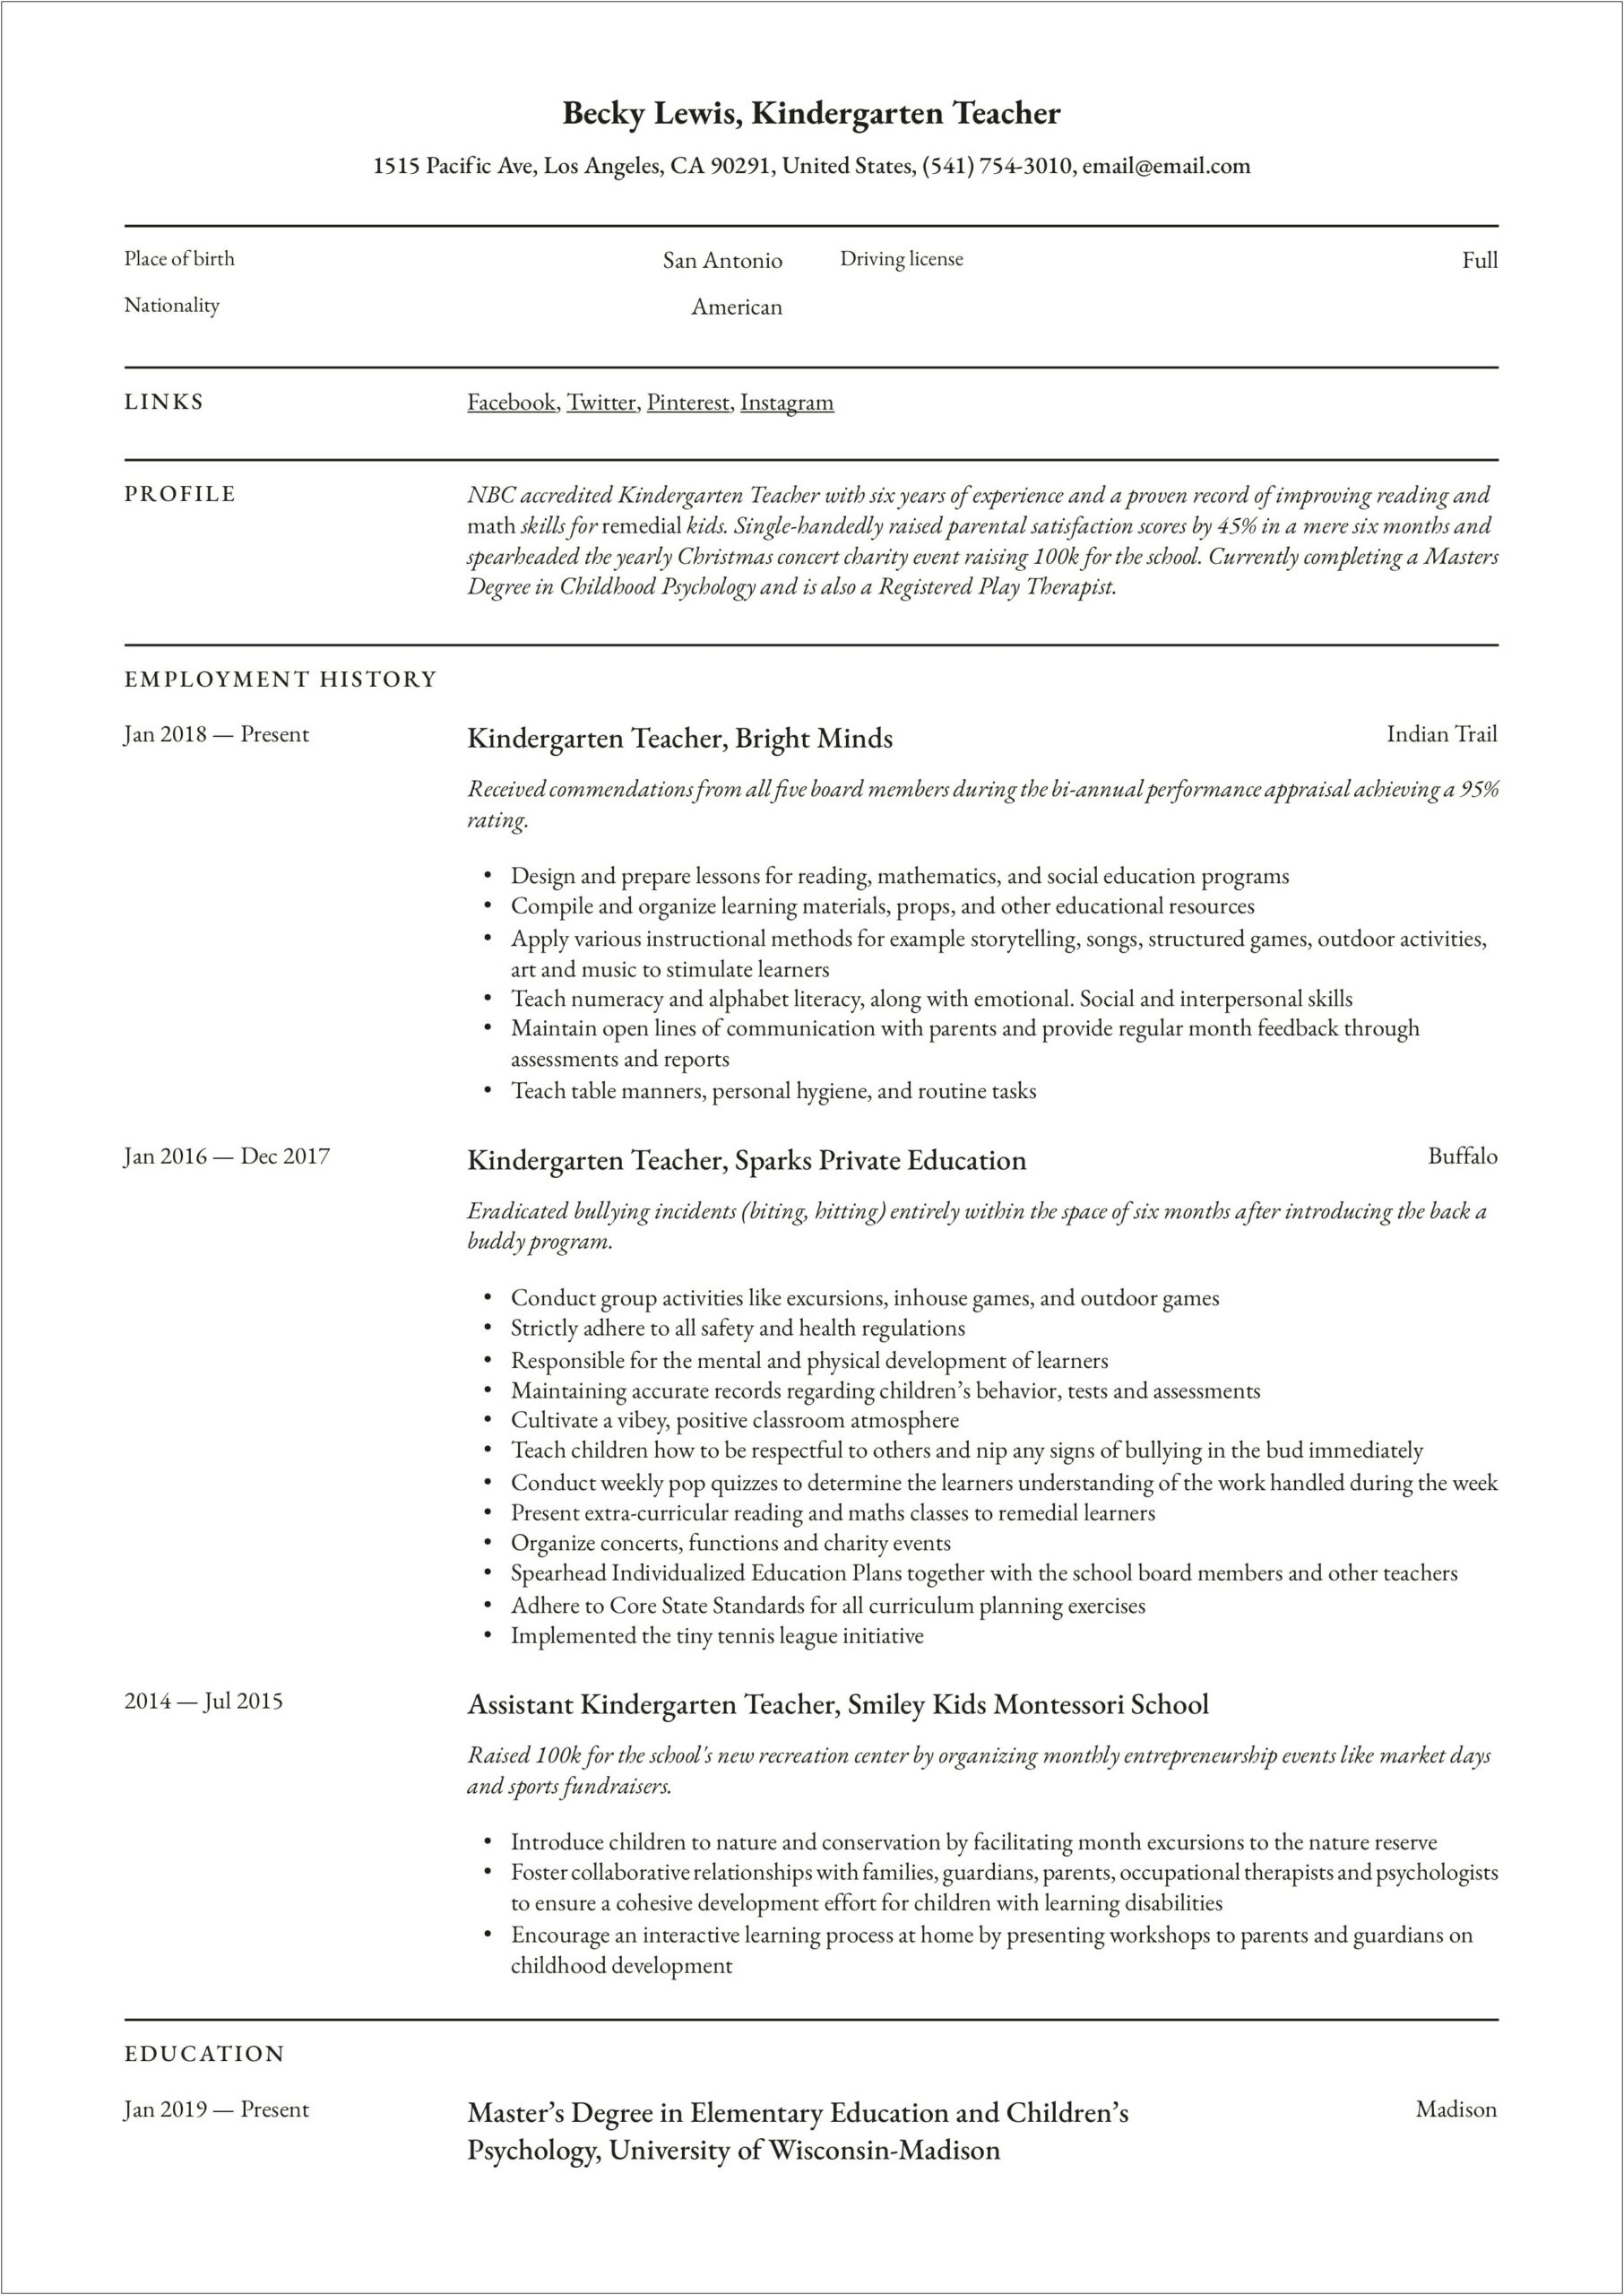 Sample Resume For Montessori Lead Teacher